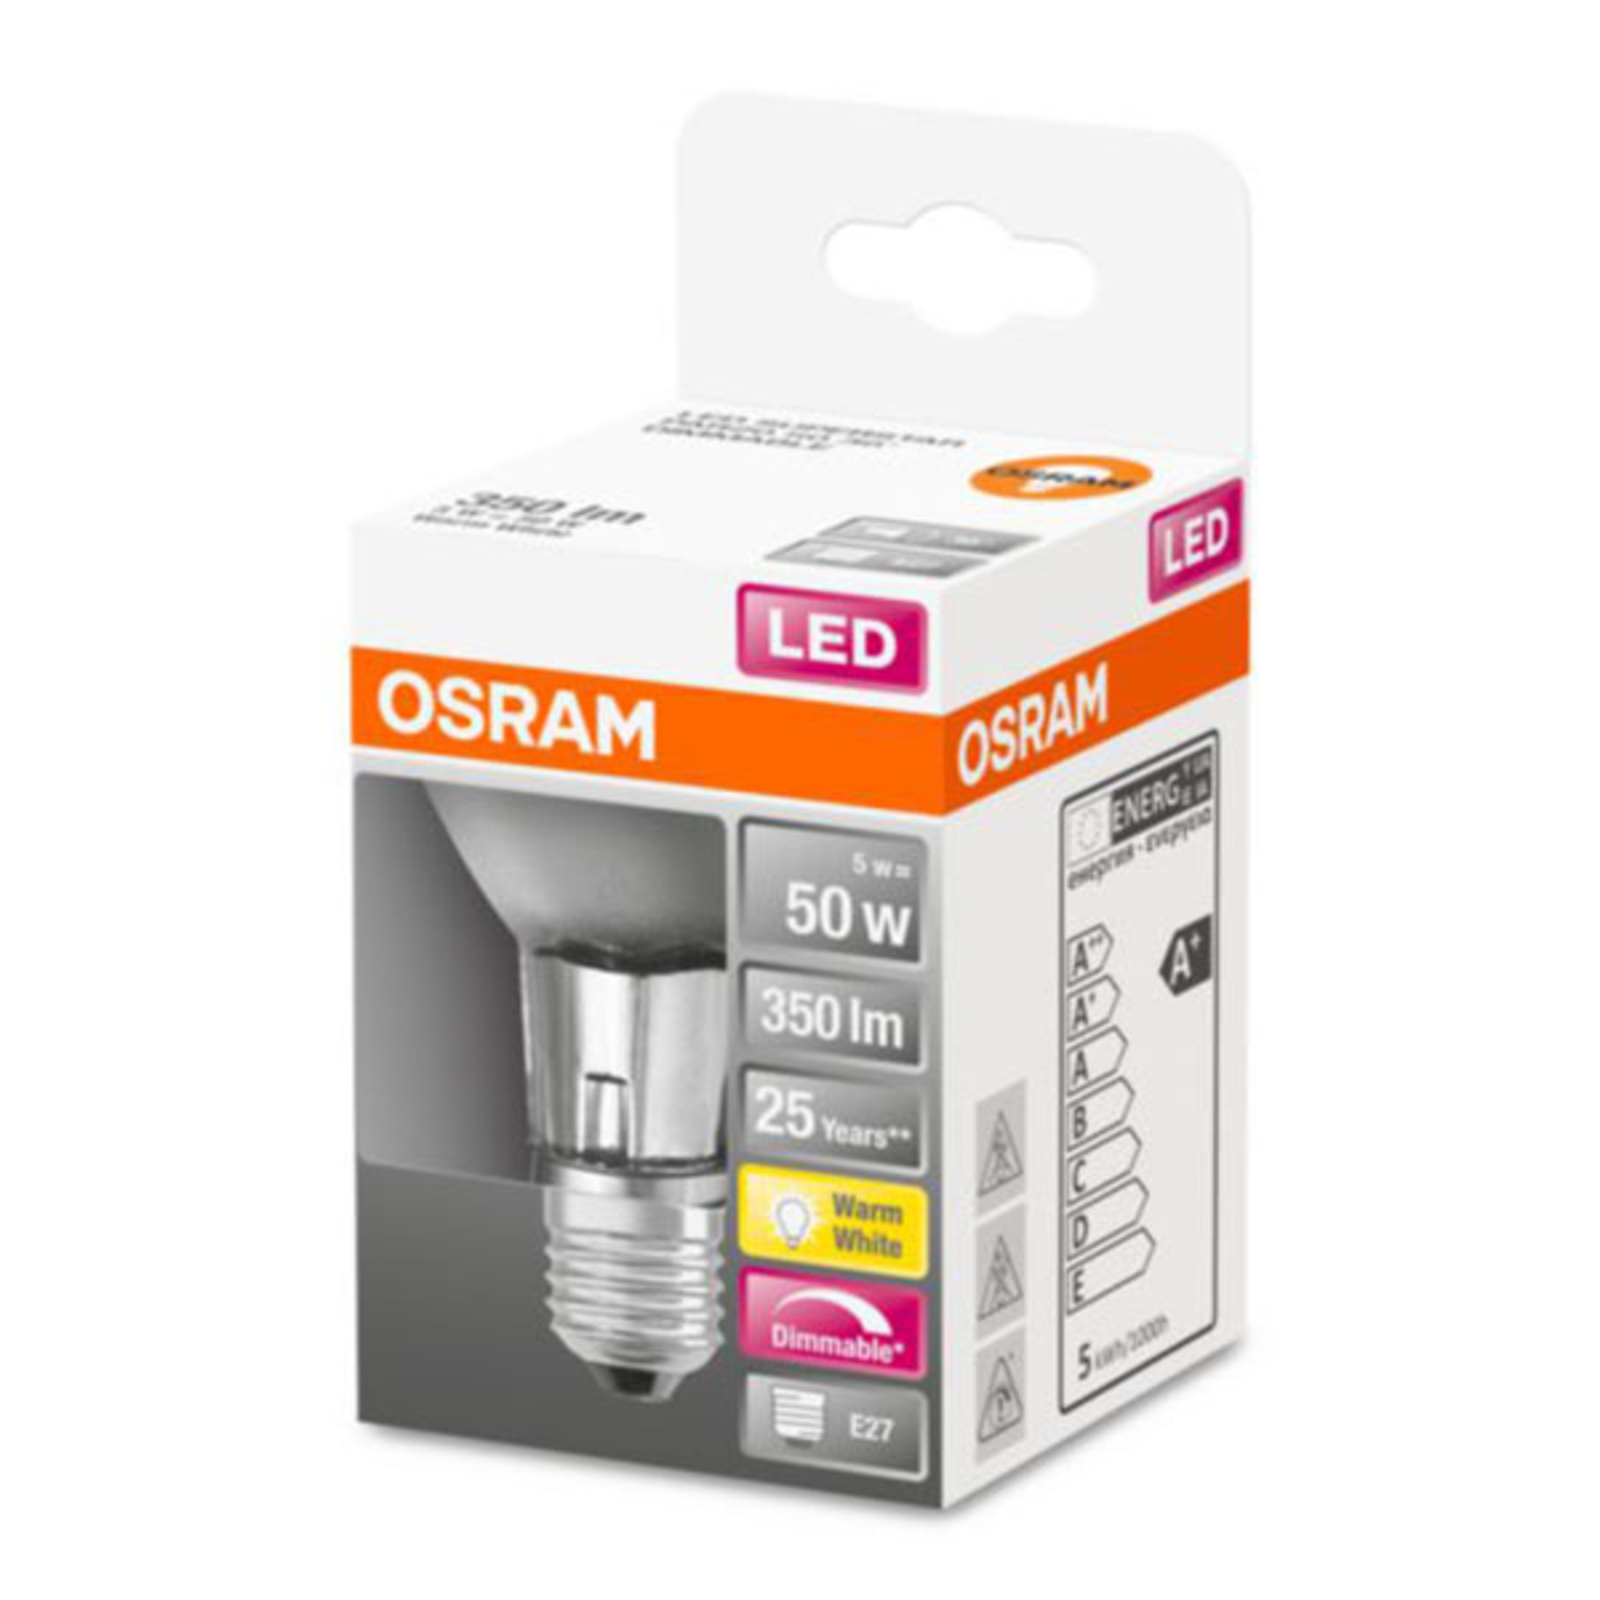 OSRAM LED bulb E27 6.4W PAR20 2700K dimmable